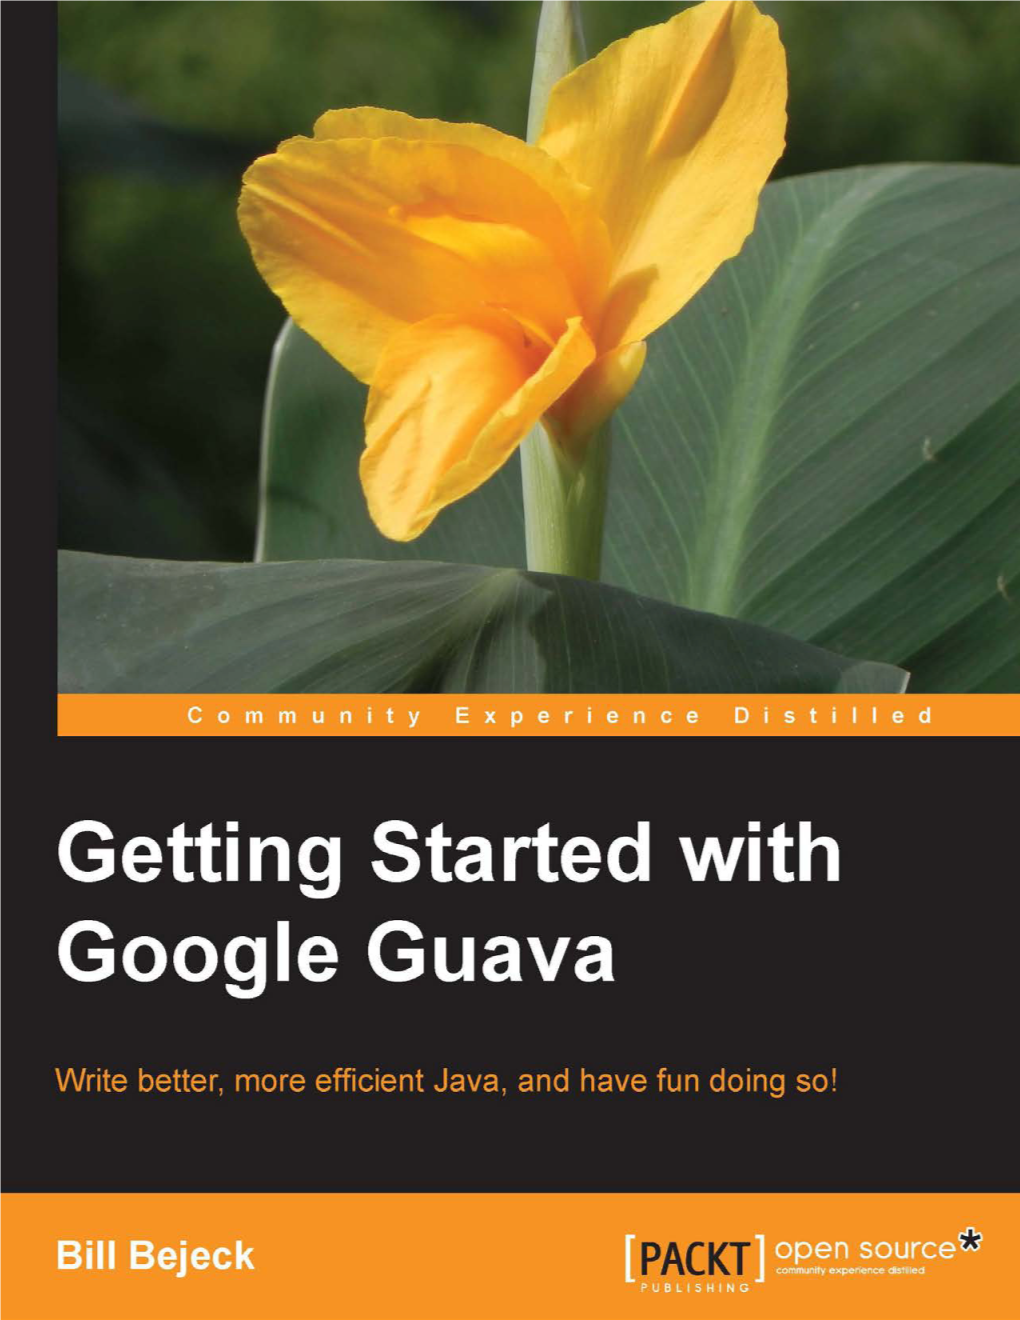 Introducing Google Guava